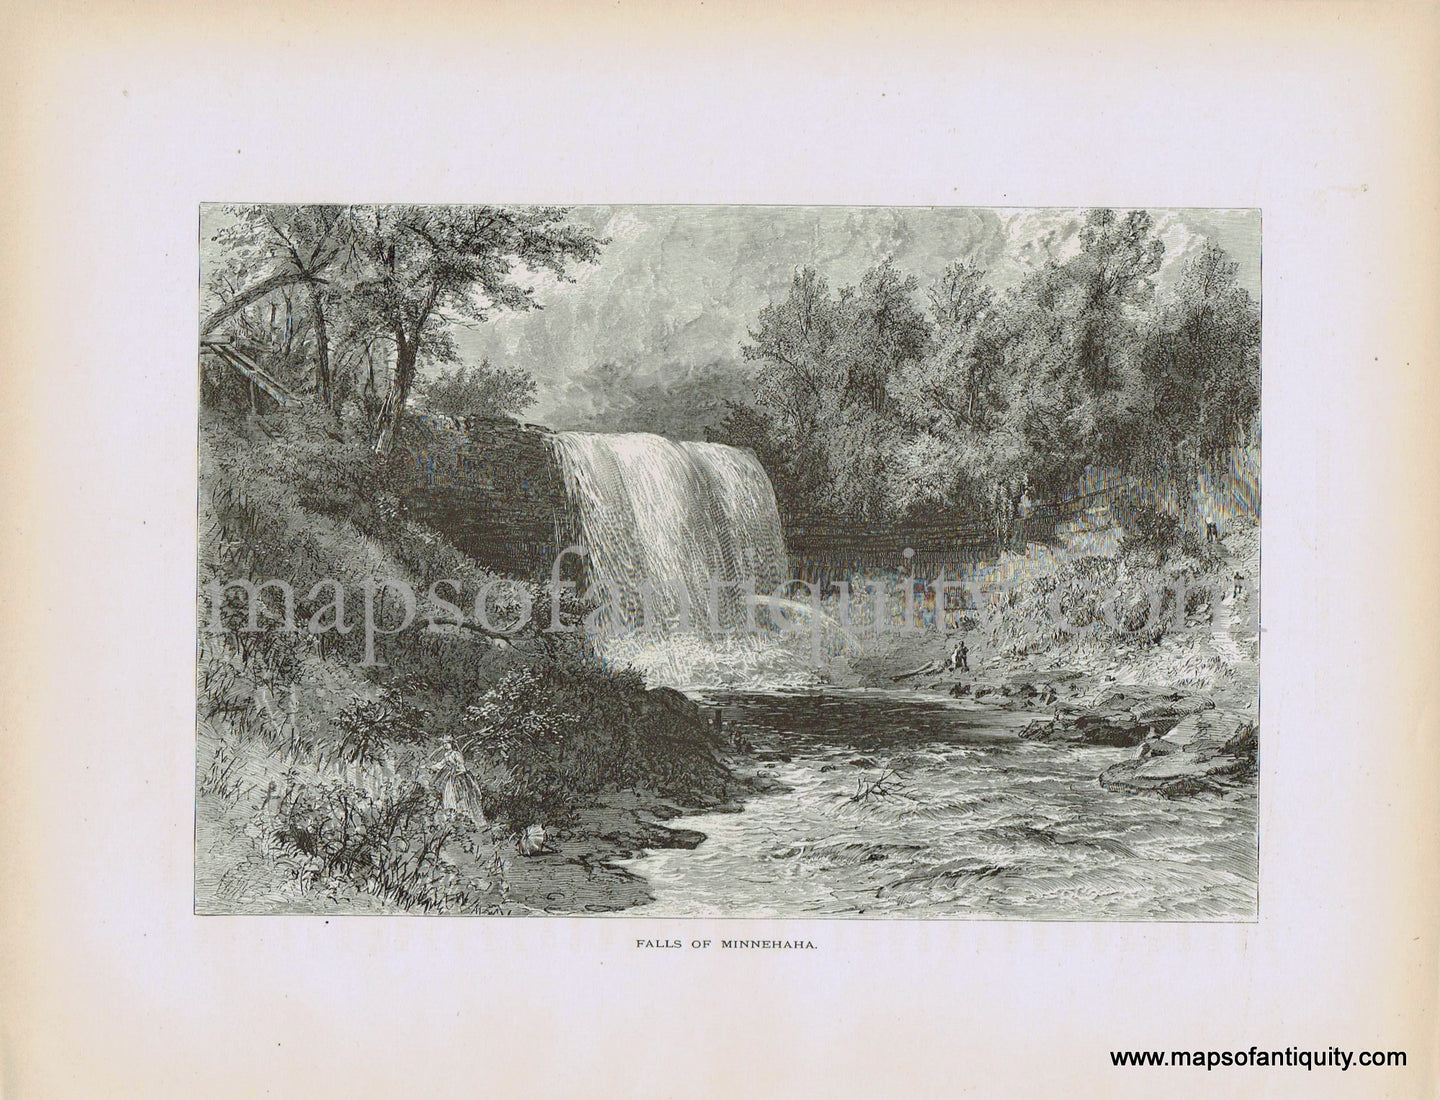 Antique-Print-Prints-Falls-of-Minnehaha-Minneapolis-Minnesota-1872-Picturesque-America-1800s-19th-century-maps-of-Antiquity